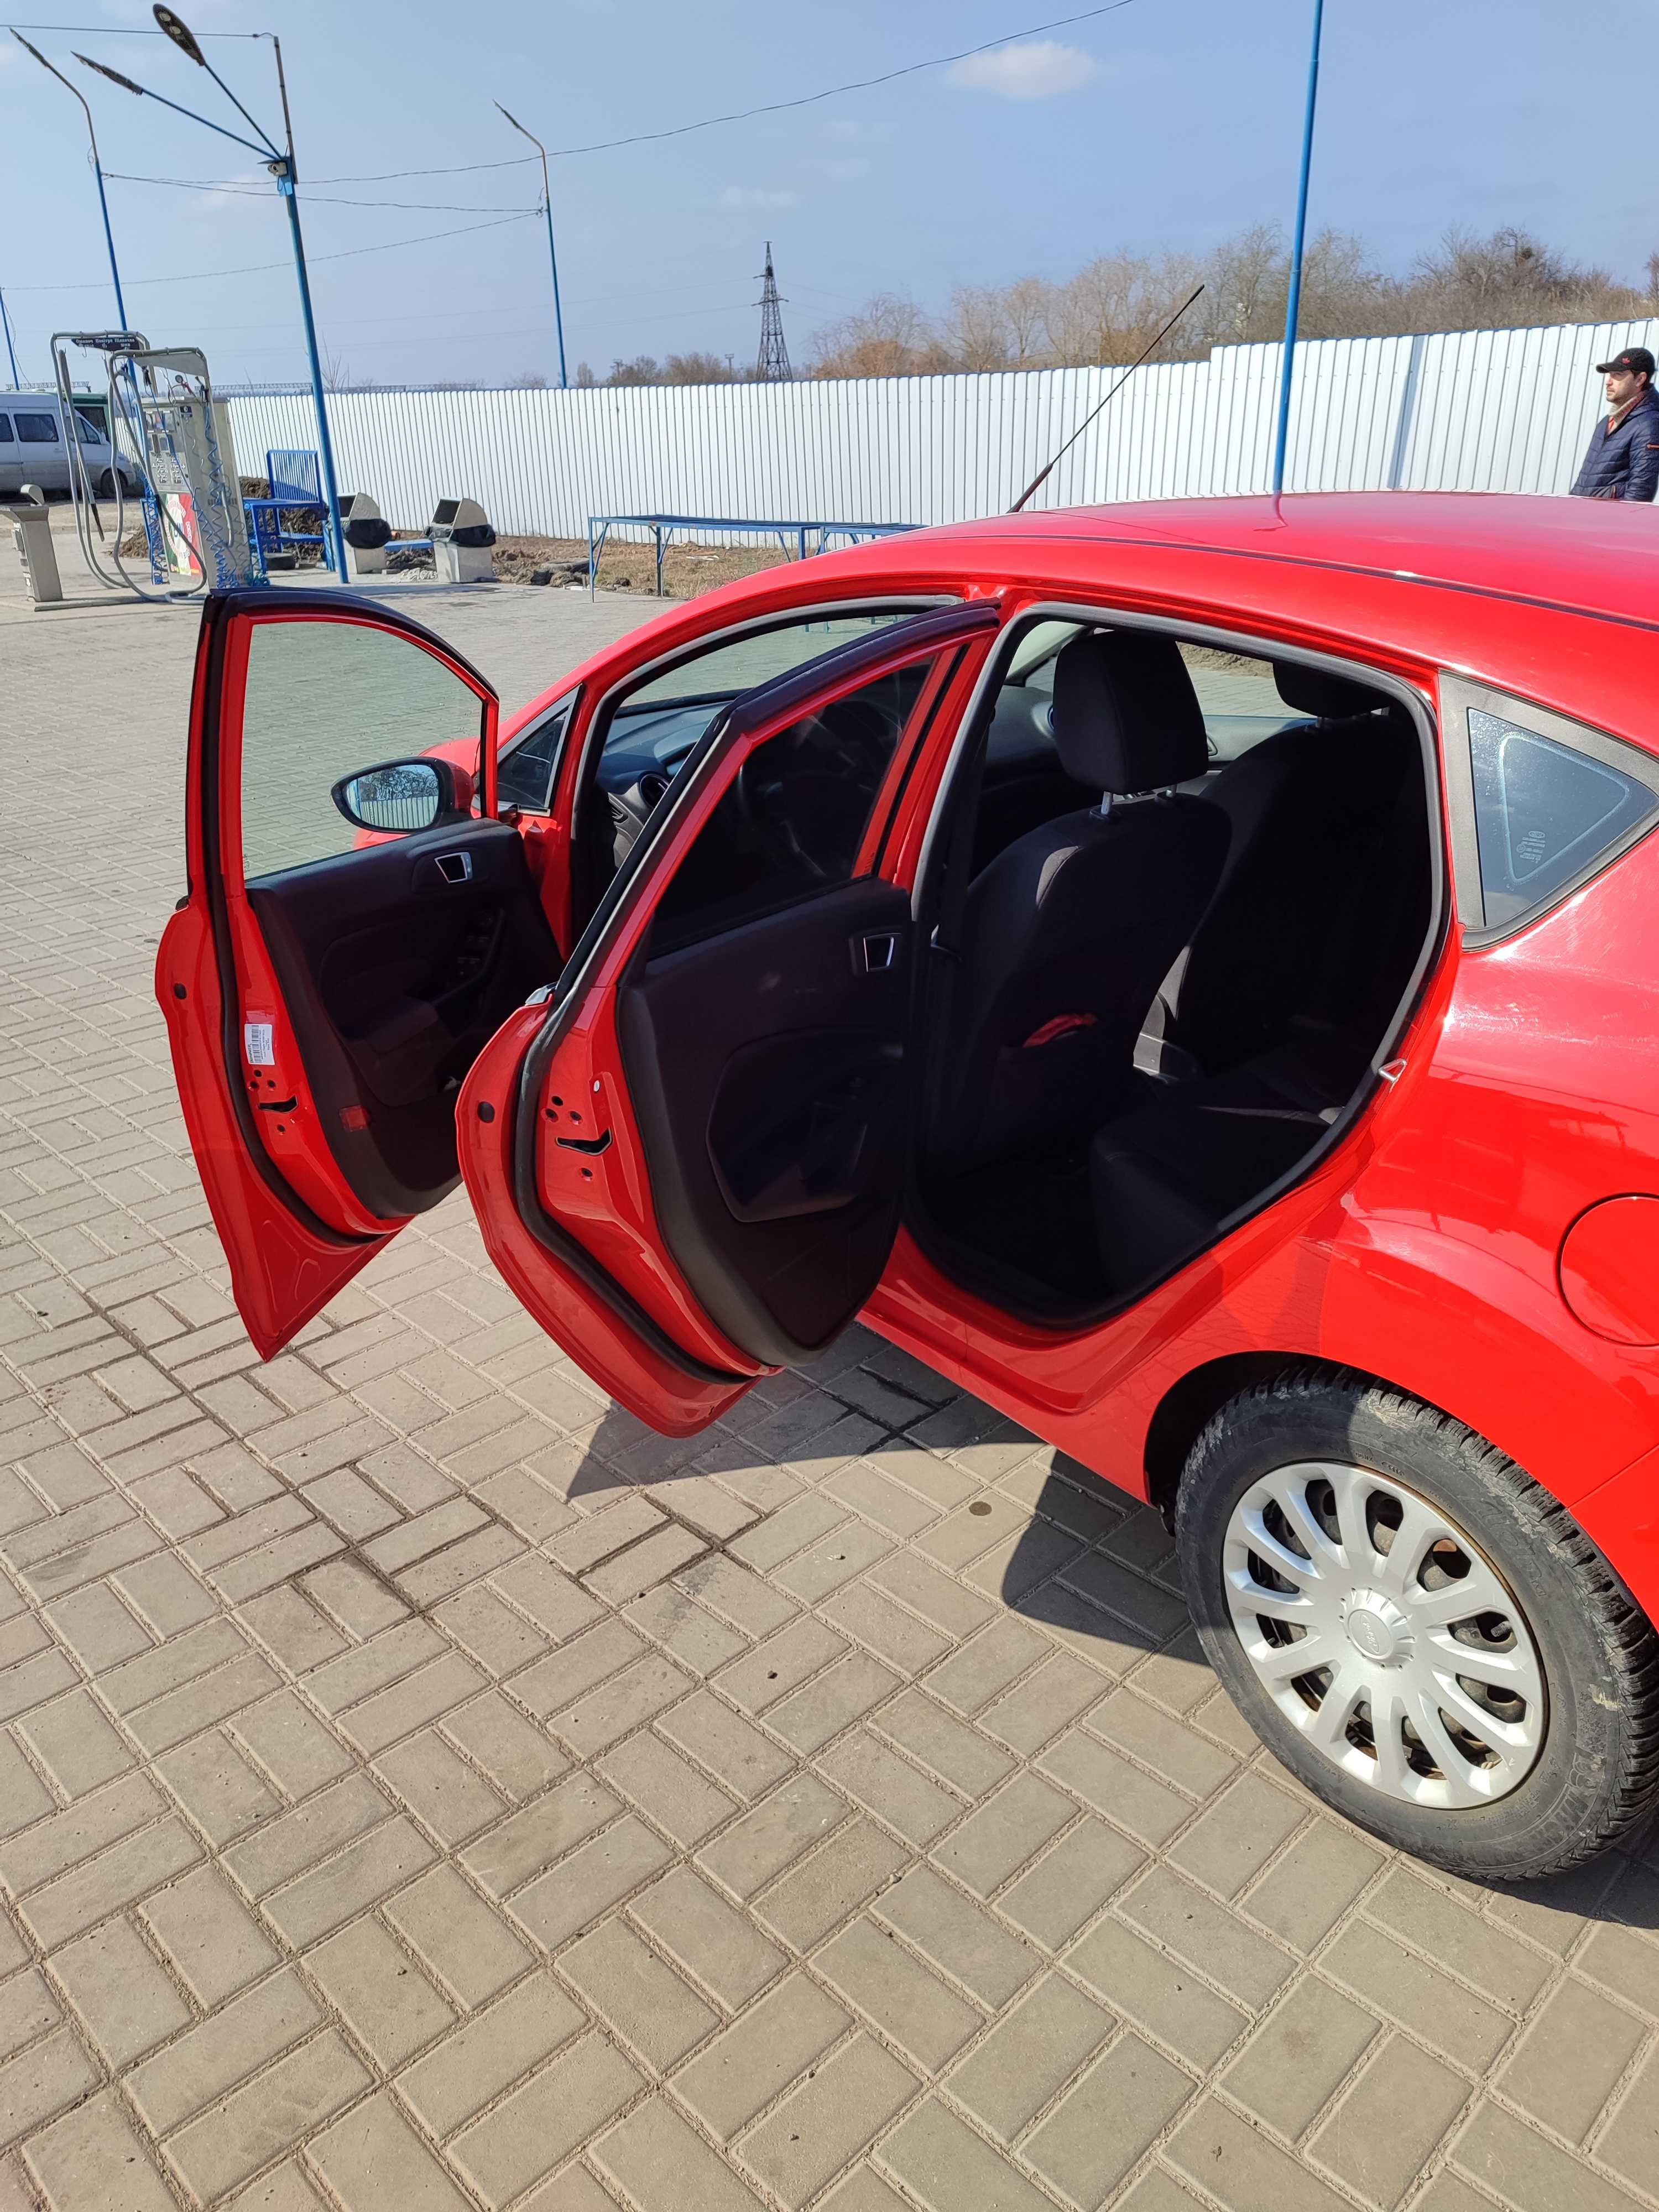 Ford Fiesta 1.0 EcoBoost, 2015 года, 72000 пробег